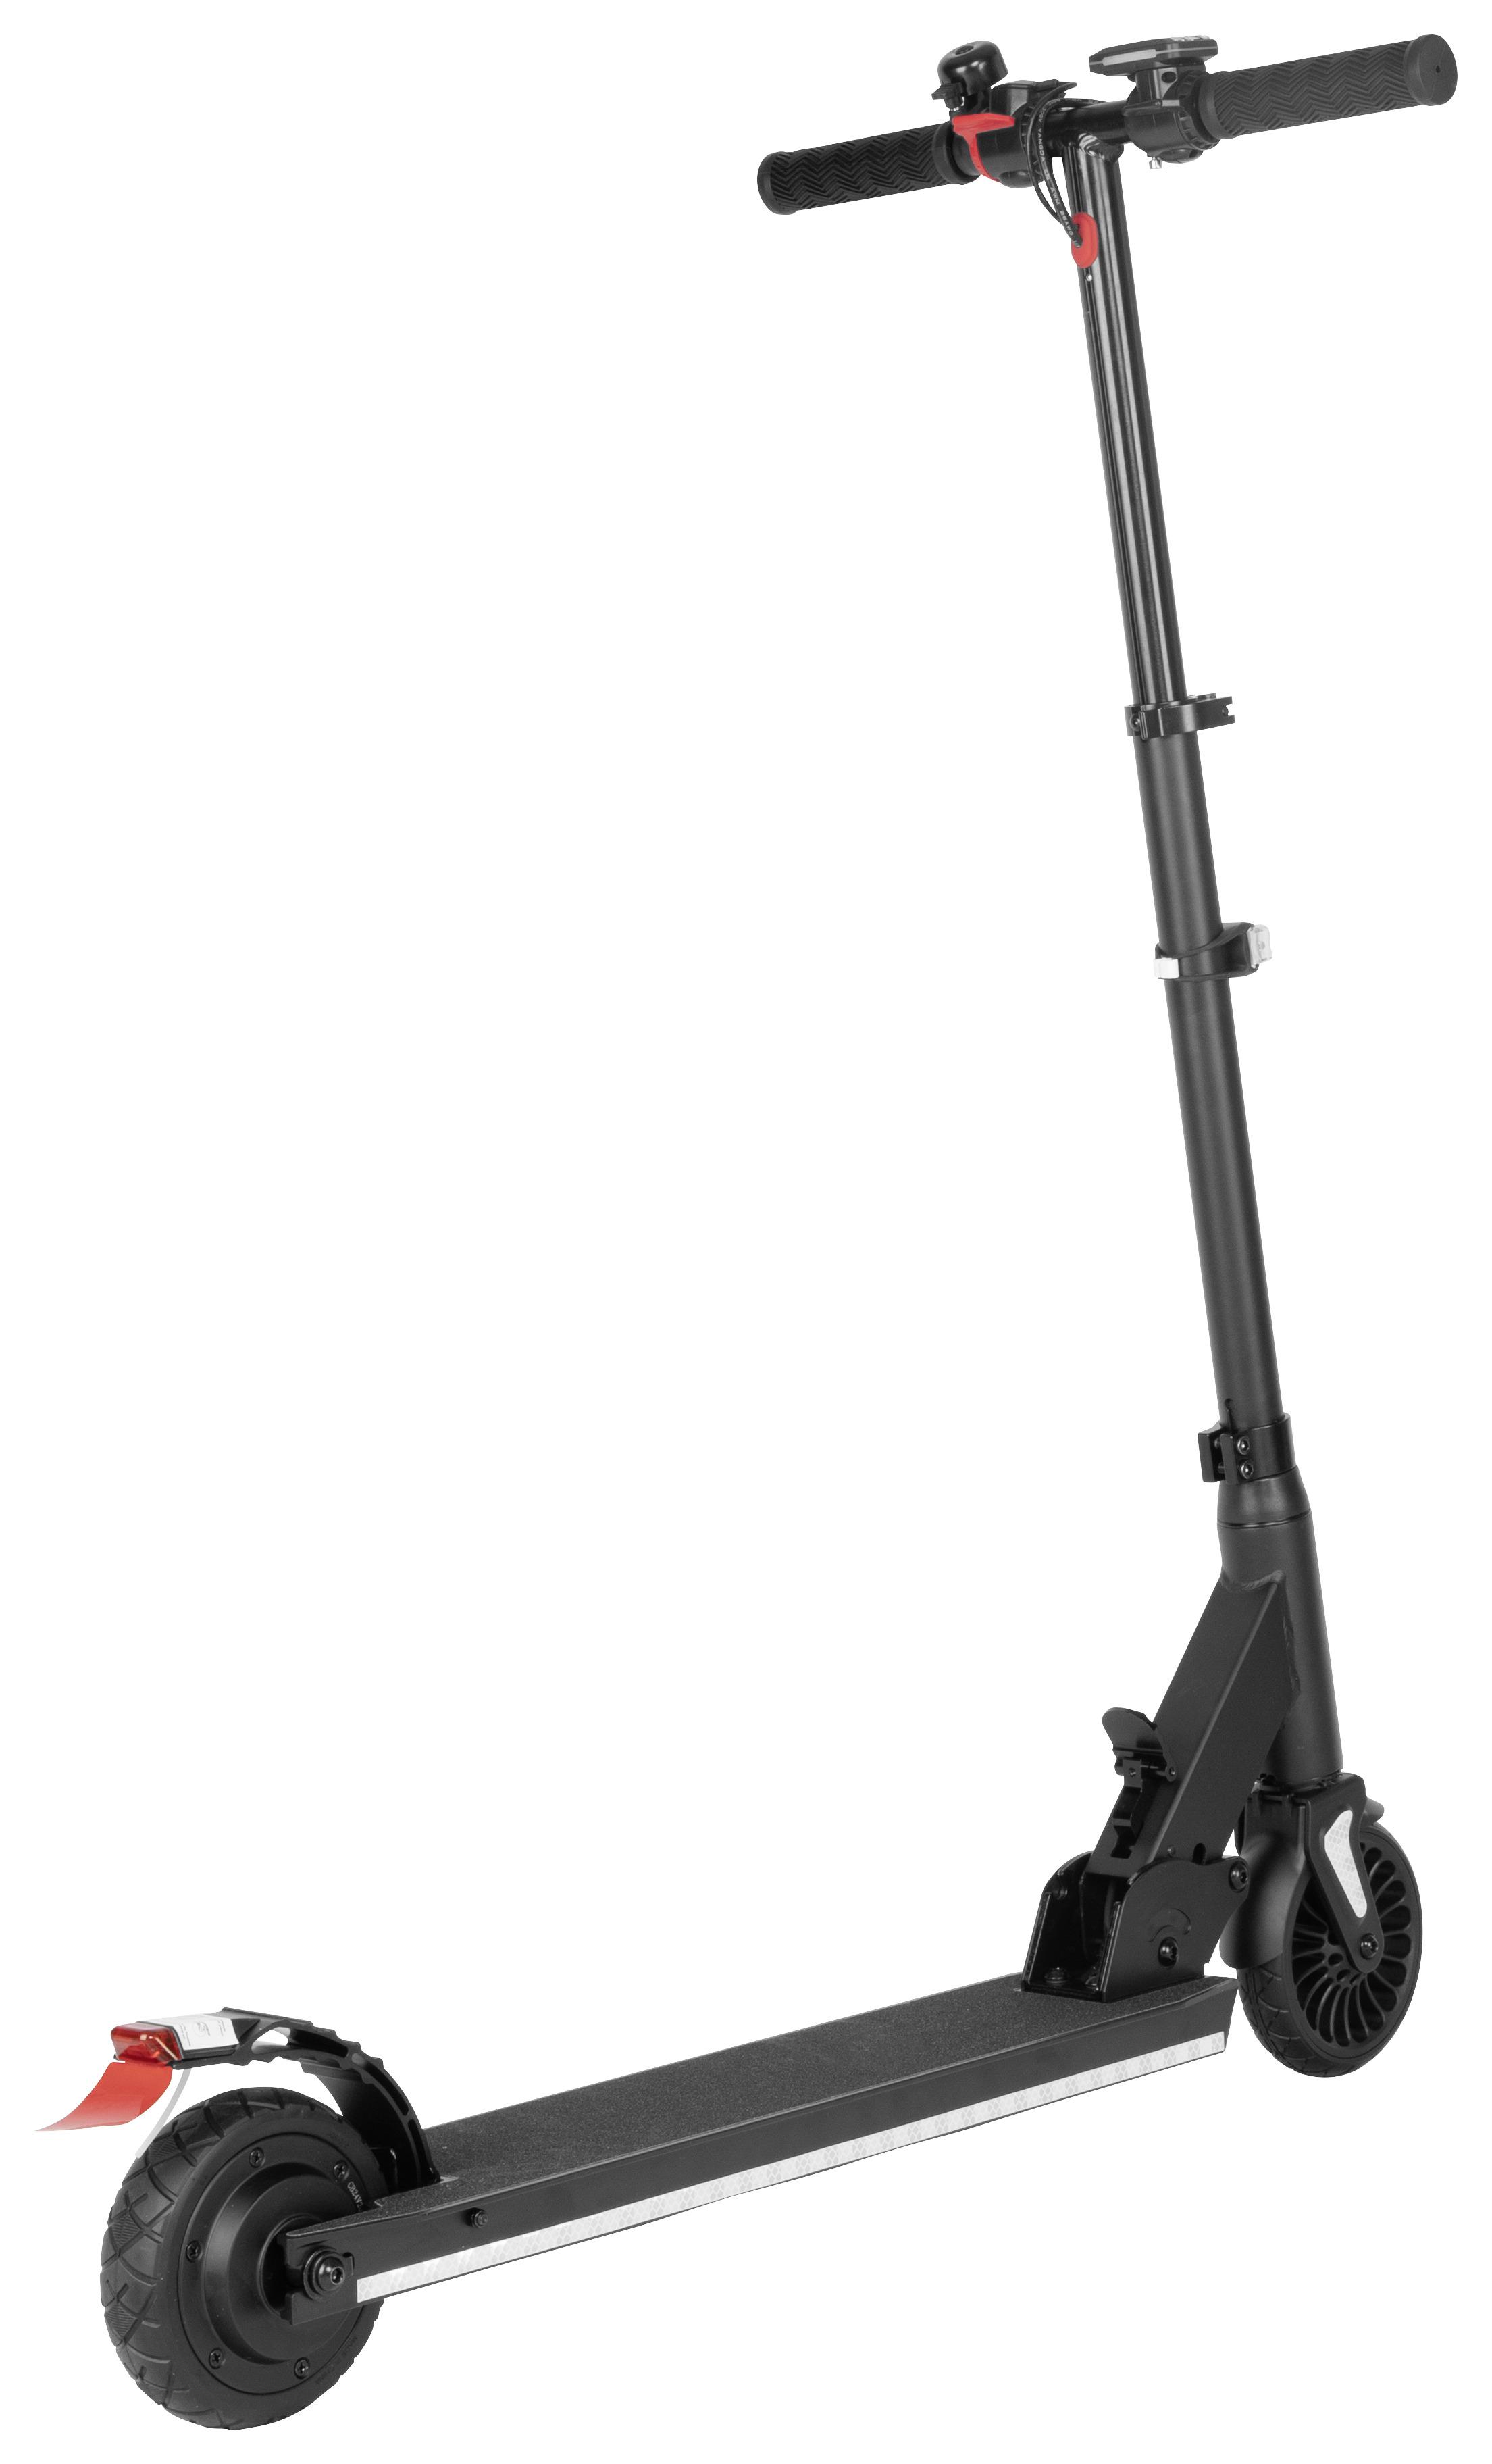 E-Scooter Klappbar Esa 700 mit Parkständer - Basics, Kunststoff/Metall (88/18/100cm)